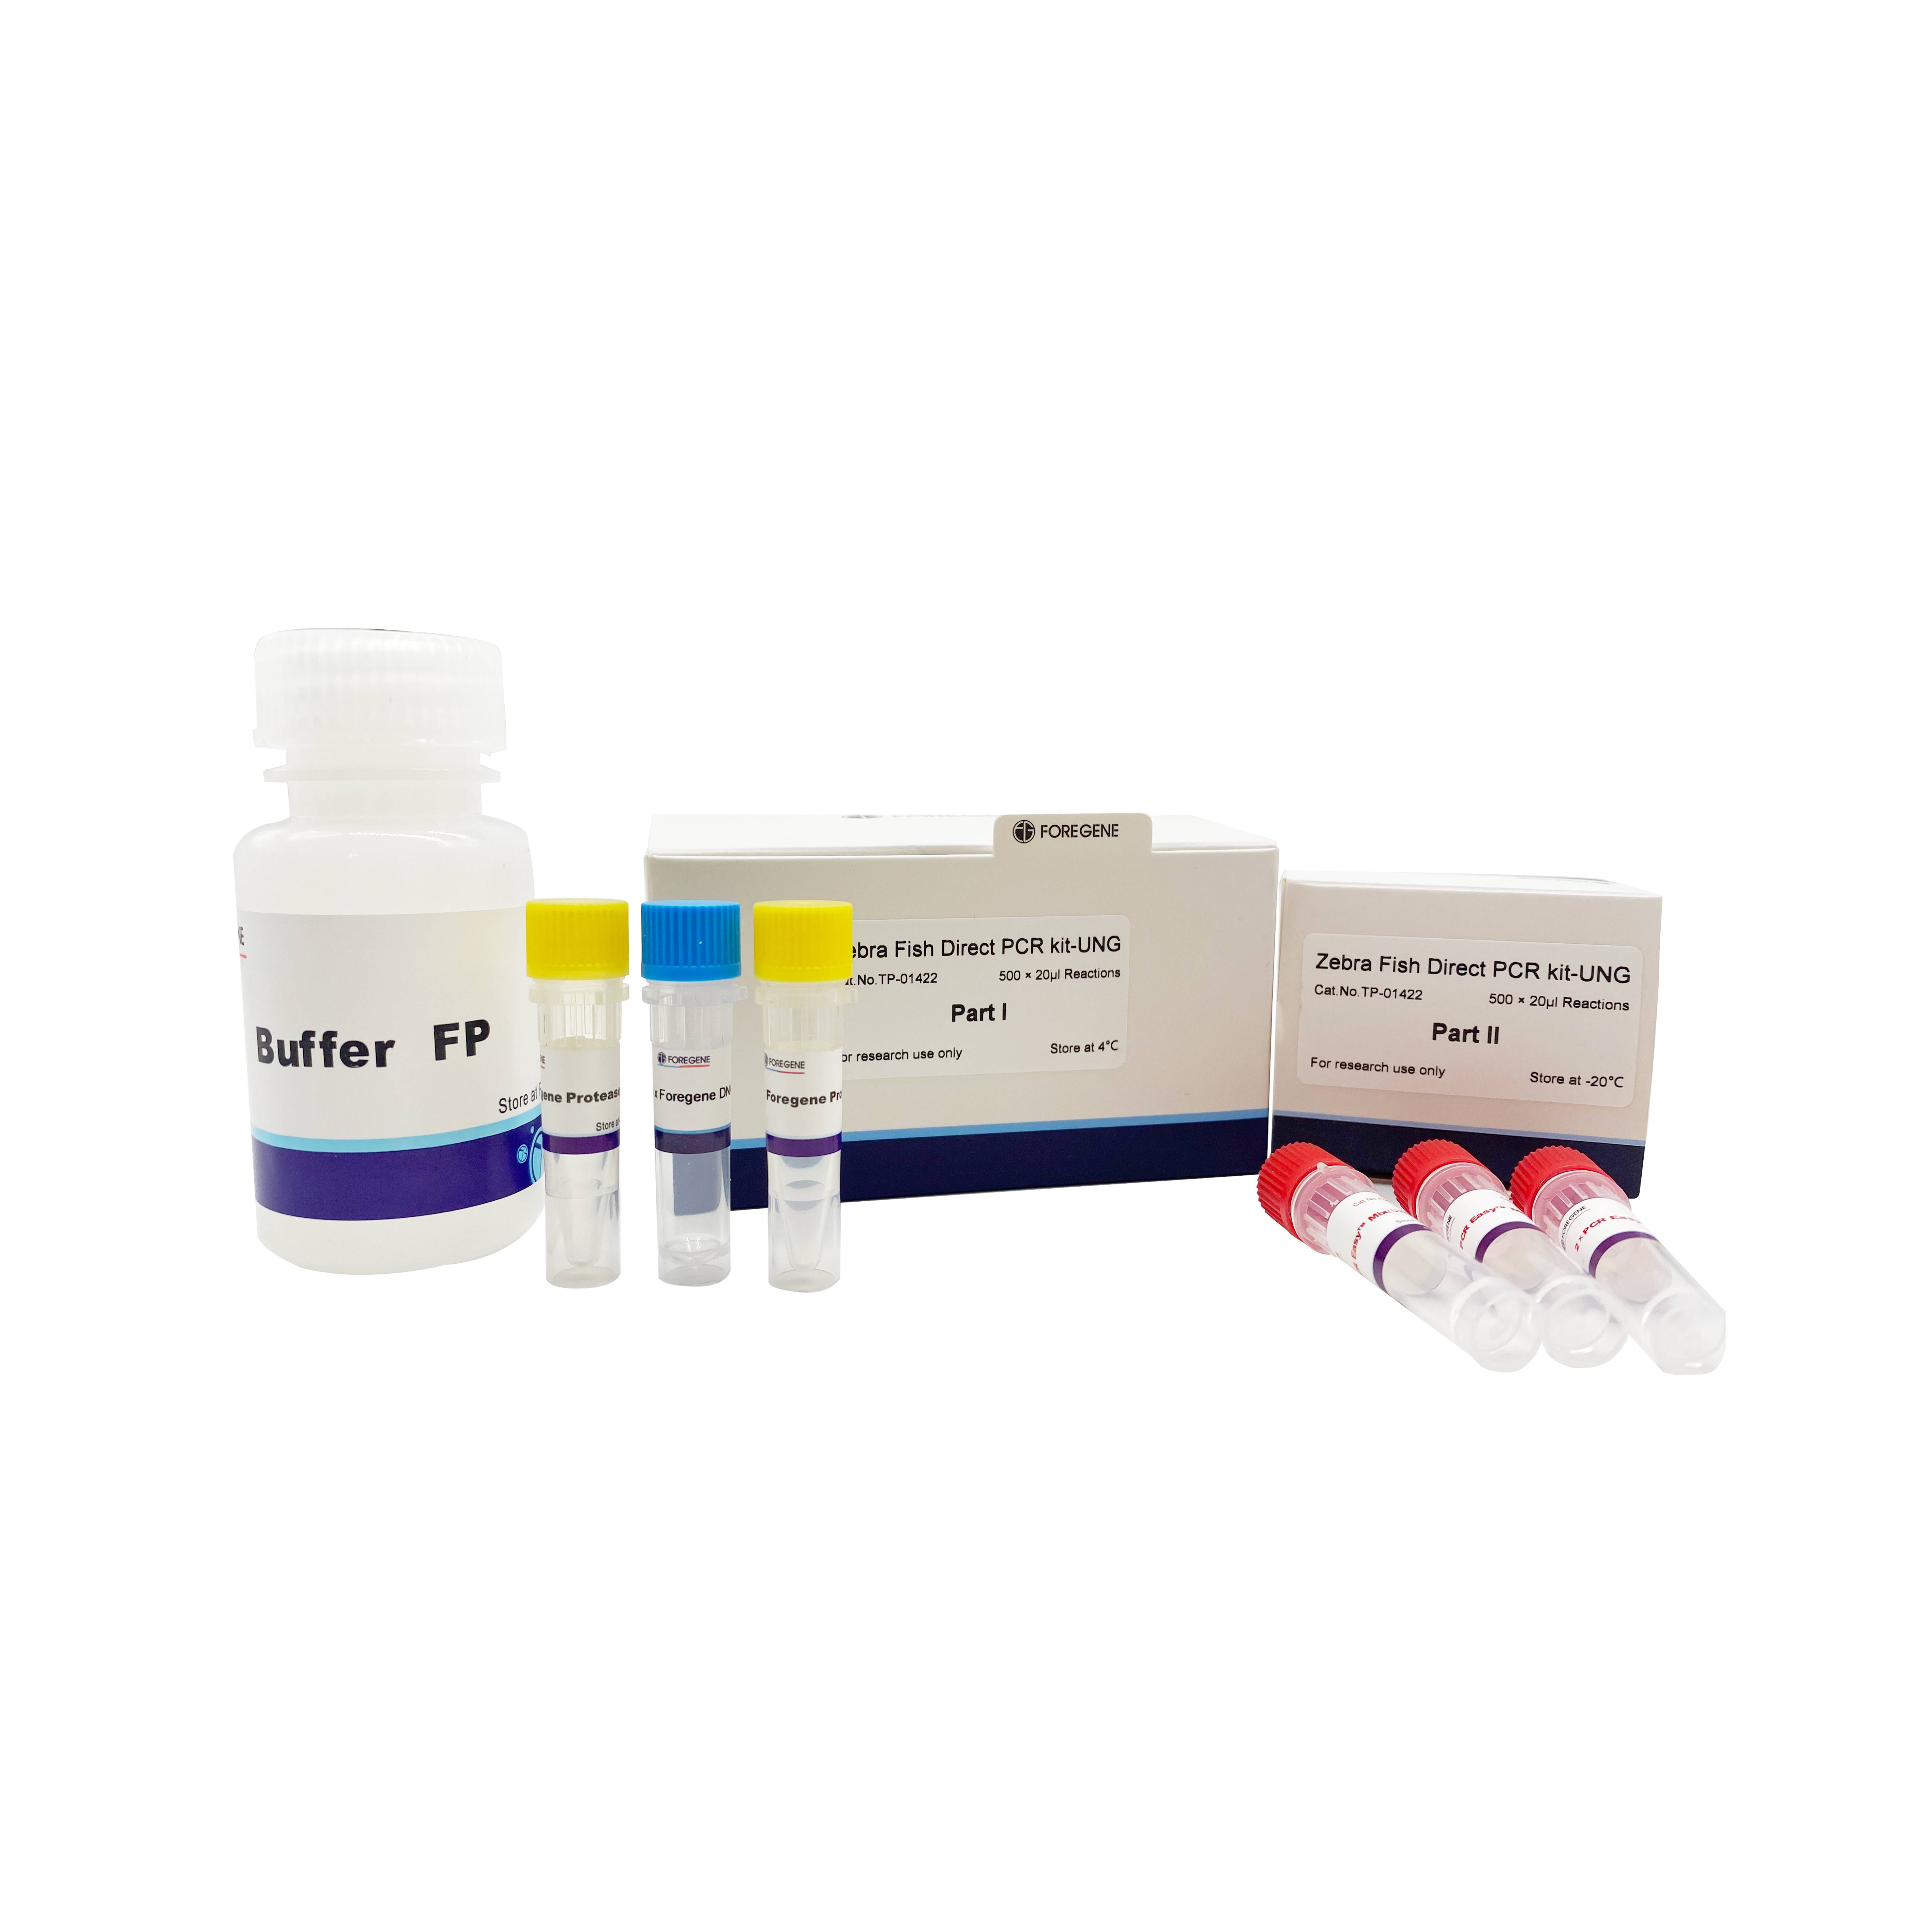 Pysgod Sebra Uniongyrchol PCR Kit-UNG Adweithydd Lysis PCR Uniongyrchol (sebrafish)